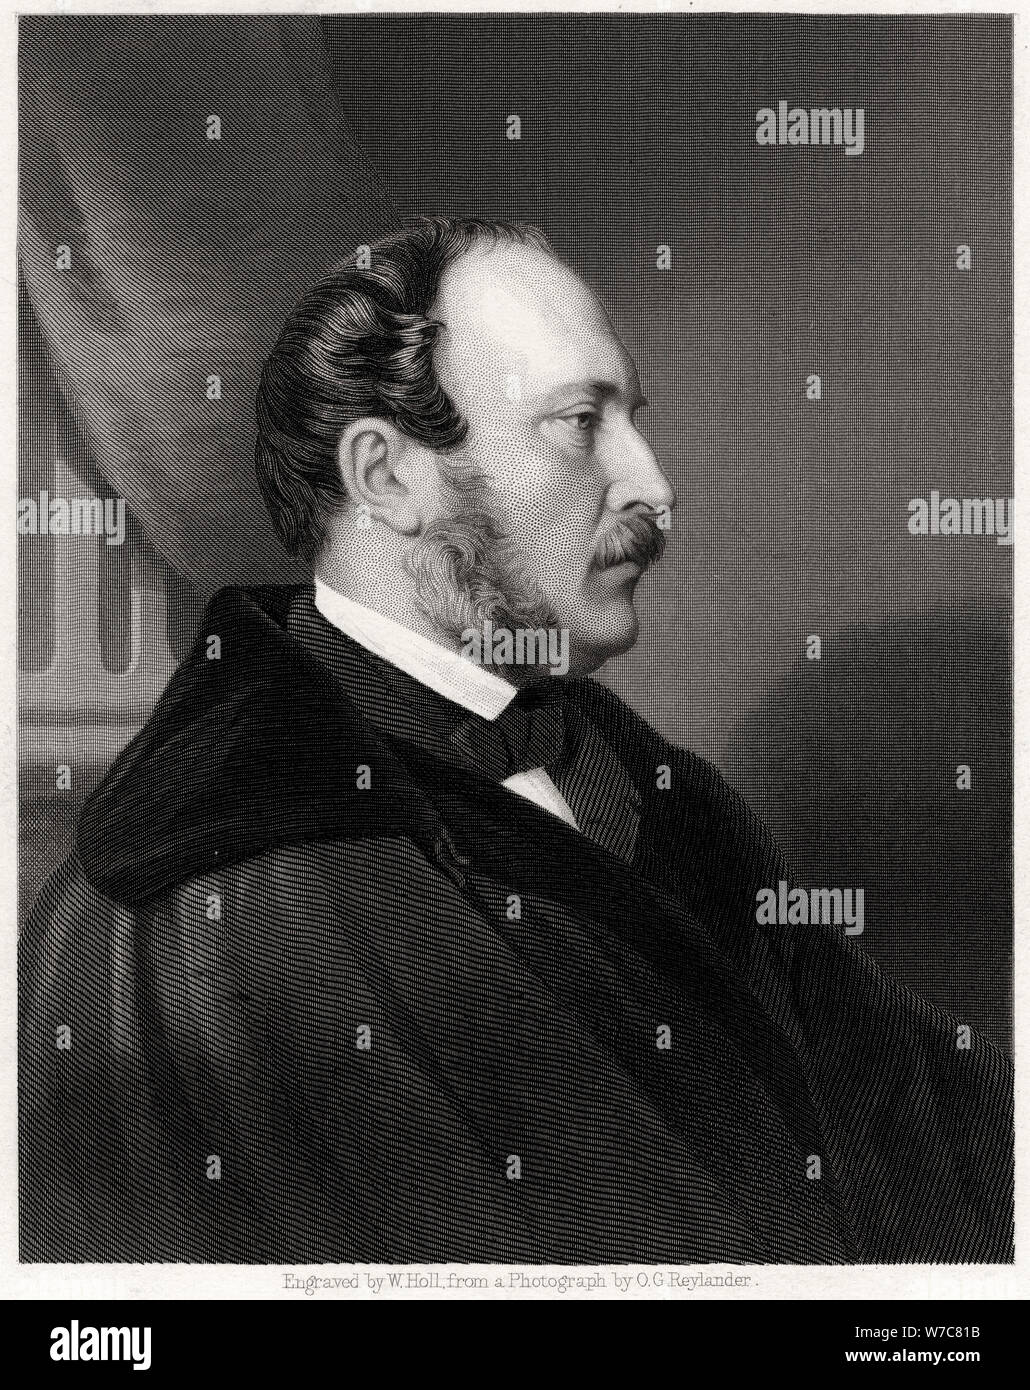 'HRH Prince Albert', 19th century. Artist: W Holl Stock Photo